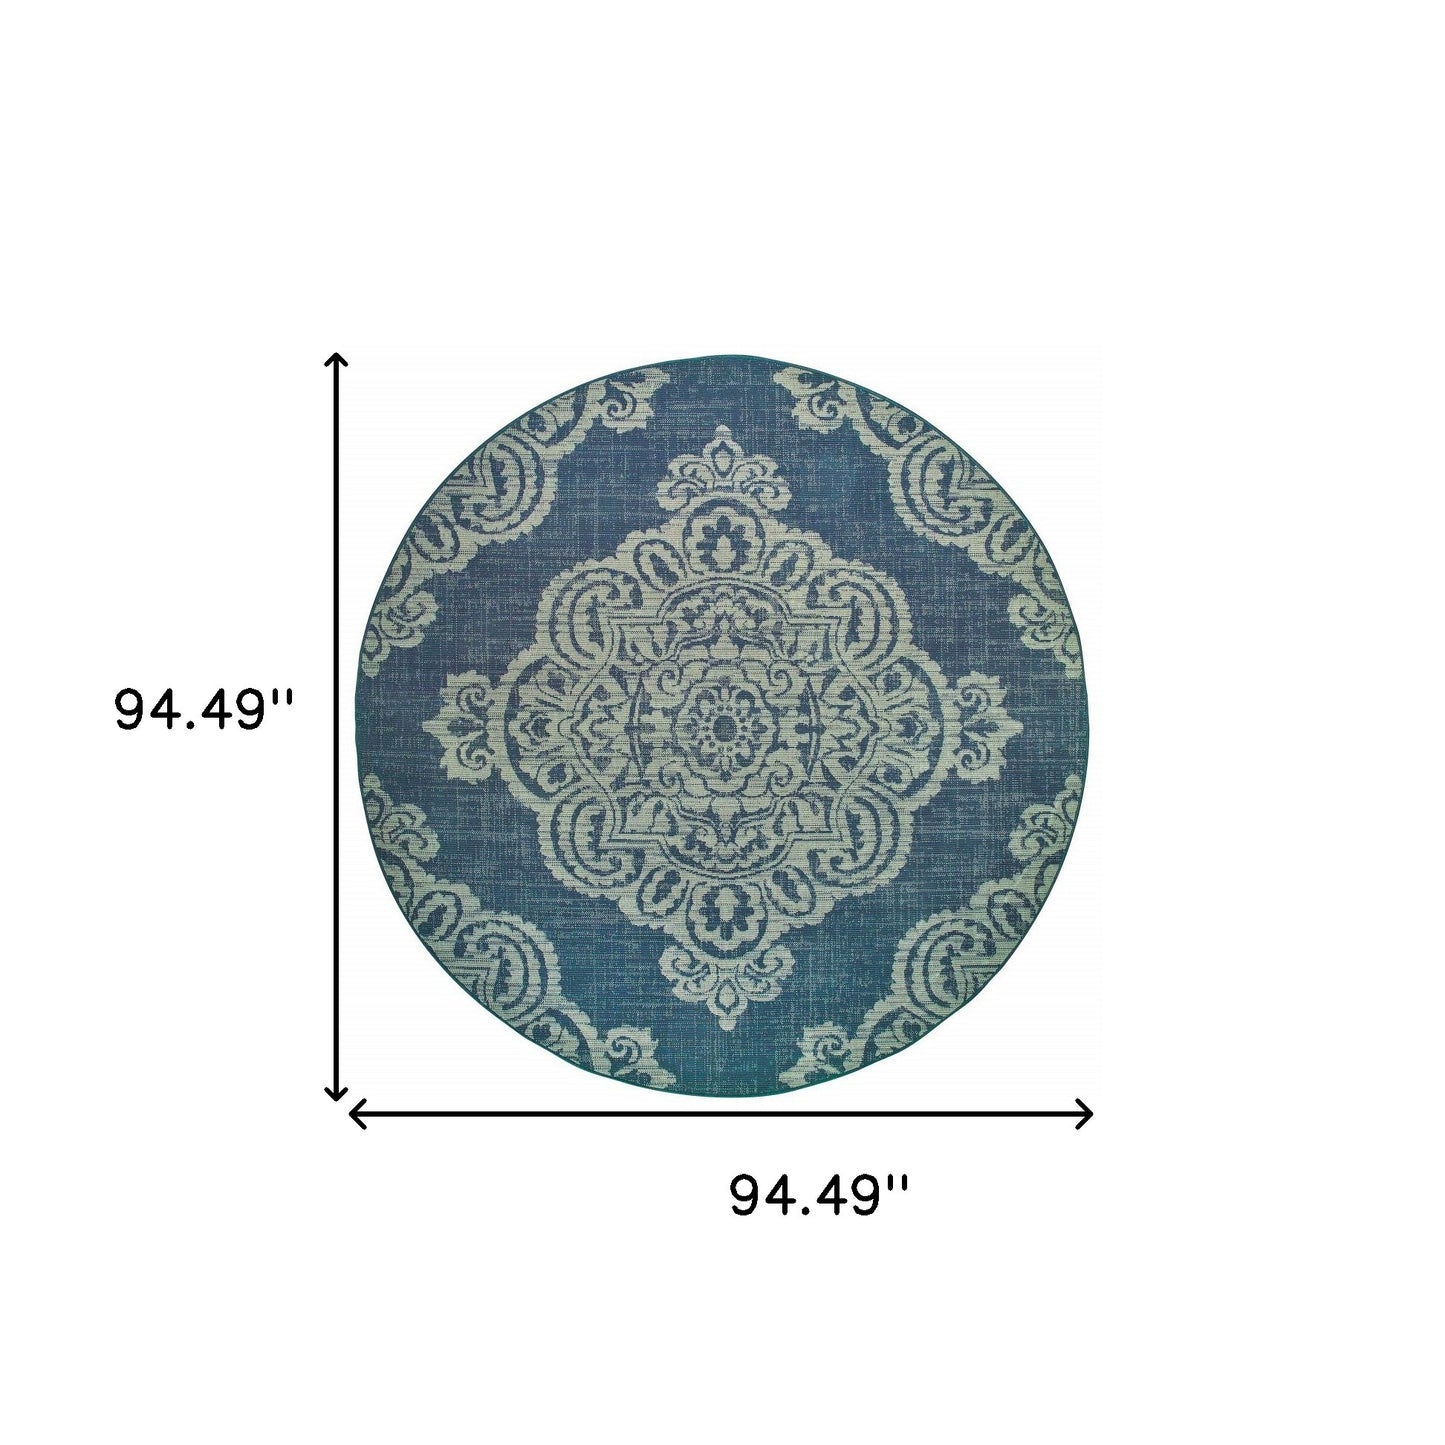 8' x 8' Blue Round Oriental Stain Resistant Indoor Outdoor Area Rug